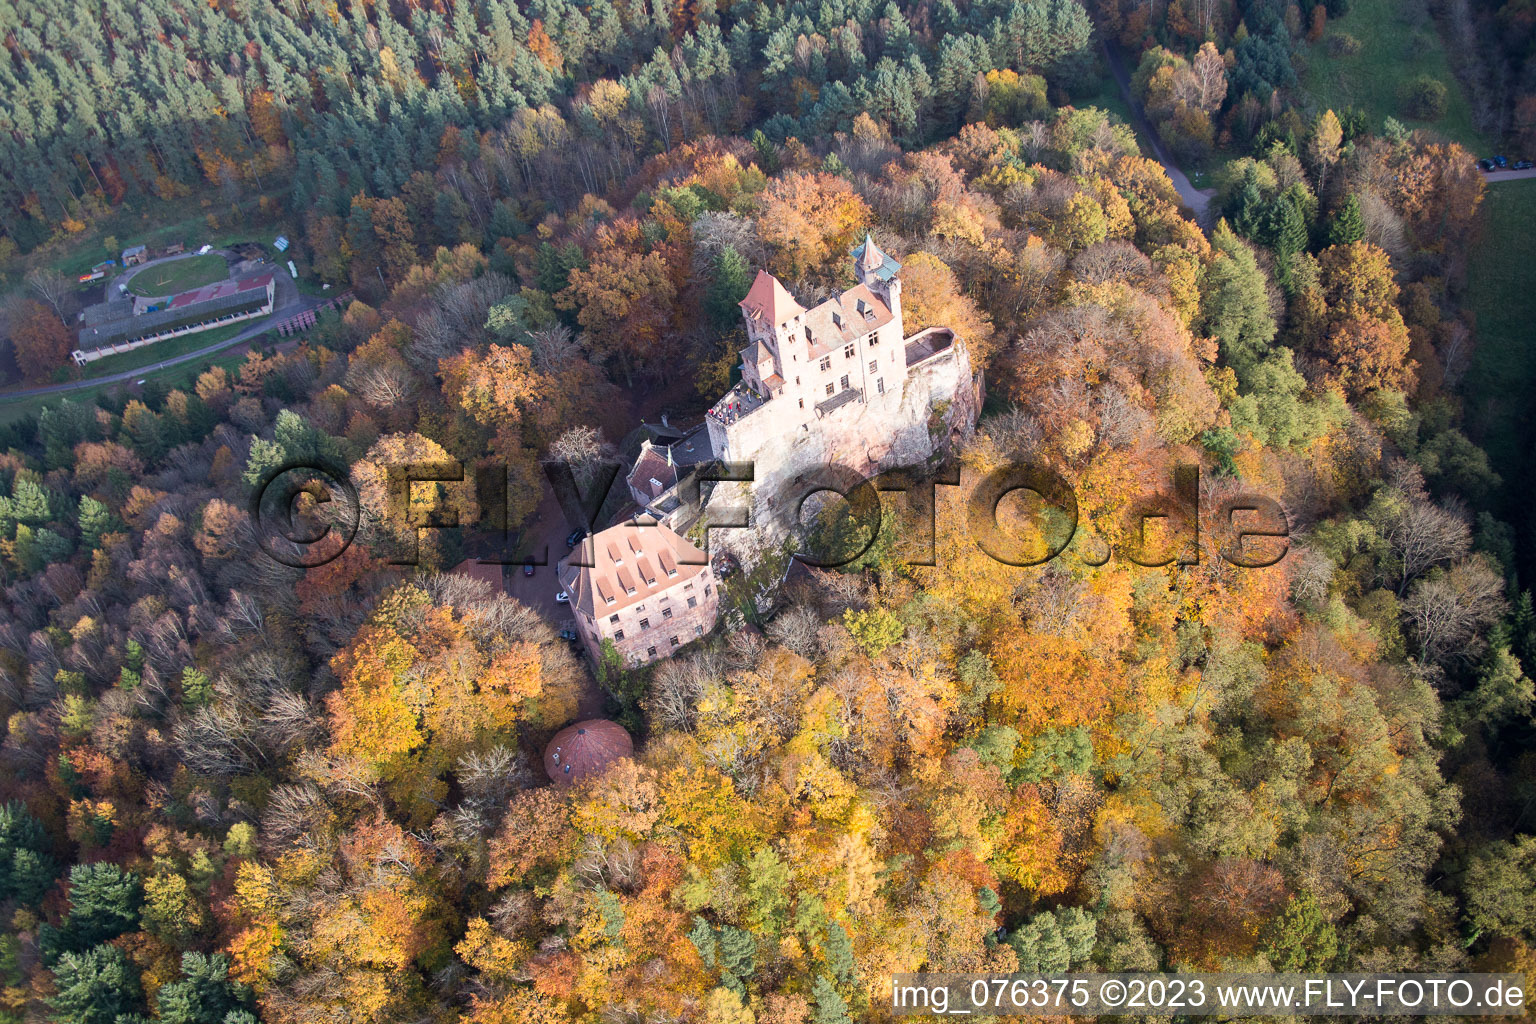 Erlenbach, château de Berwartstein à Erlenbach bei Dahn dans le département Rhénanie-Palatinat, Allemagne depuis l'avion